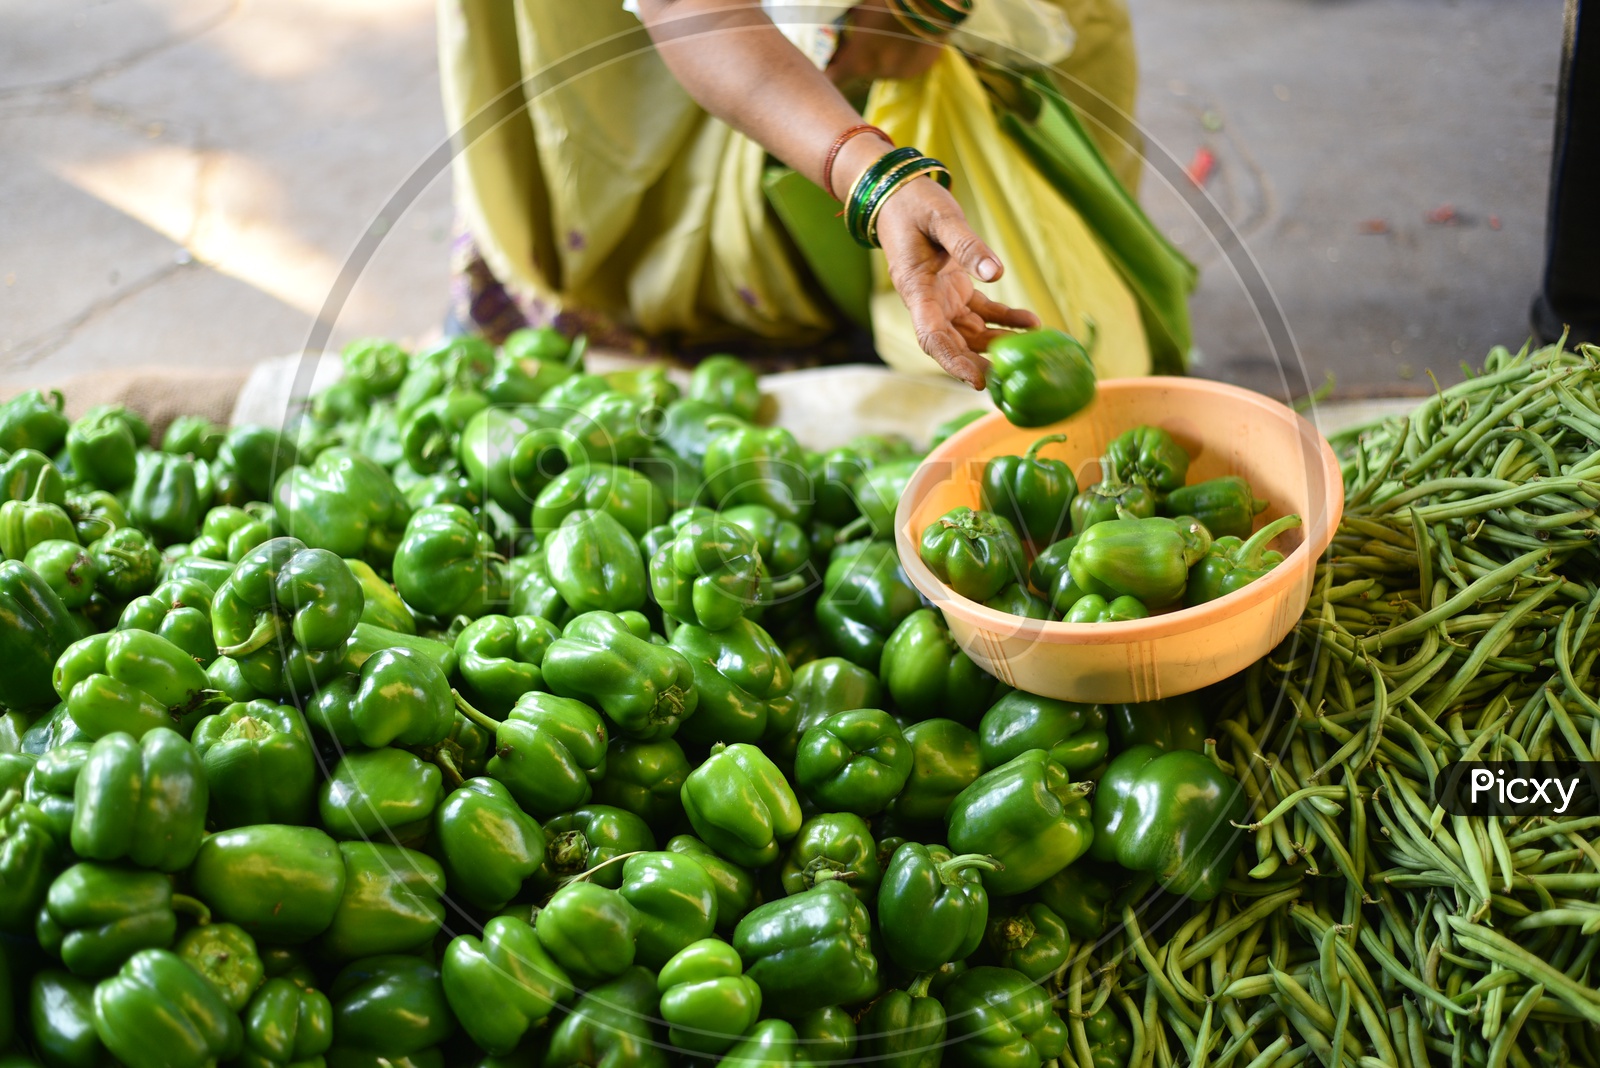 Capsicum at Local Vegetable Market/Rythu Bazar